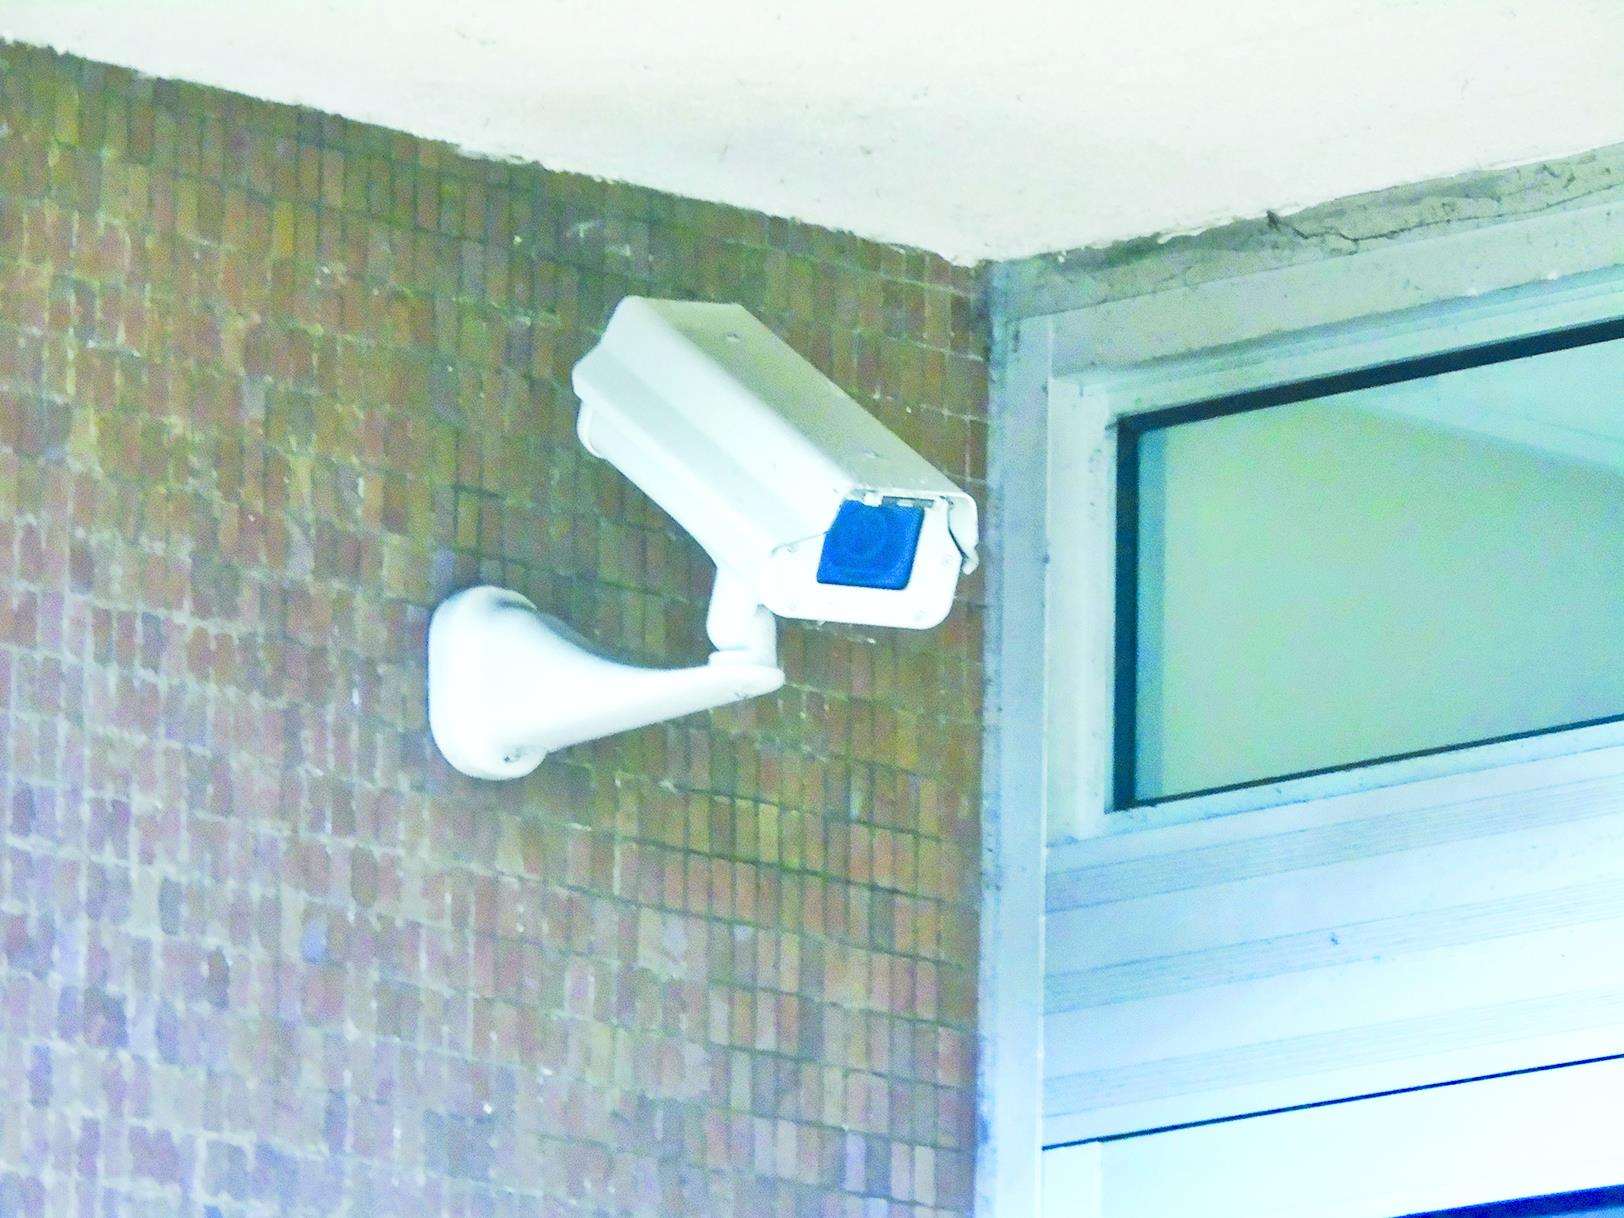 Canterbury has more CCTV cameras than Manchester, Cardiff or Edingburh